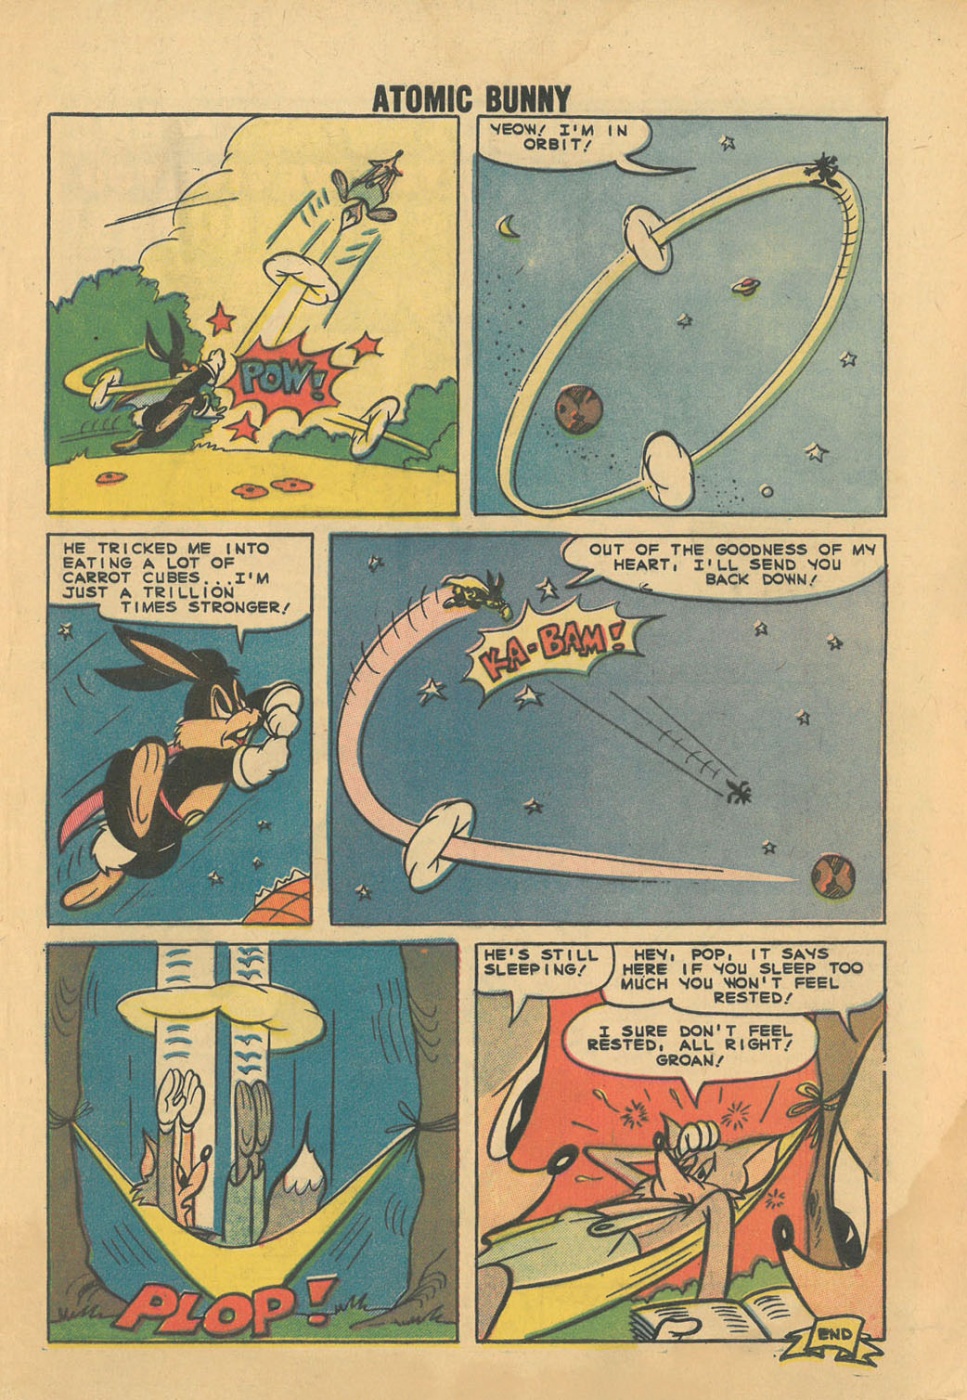 Atomic-Bunny-Comic-Strips (c) (32)